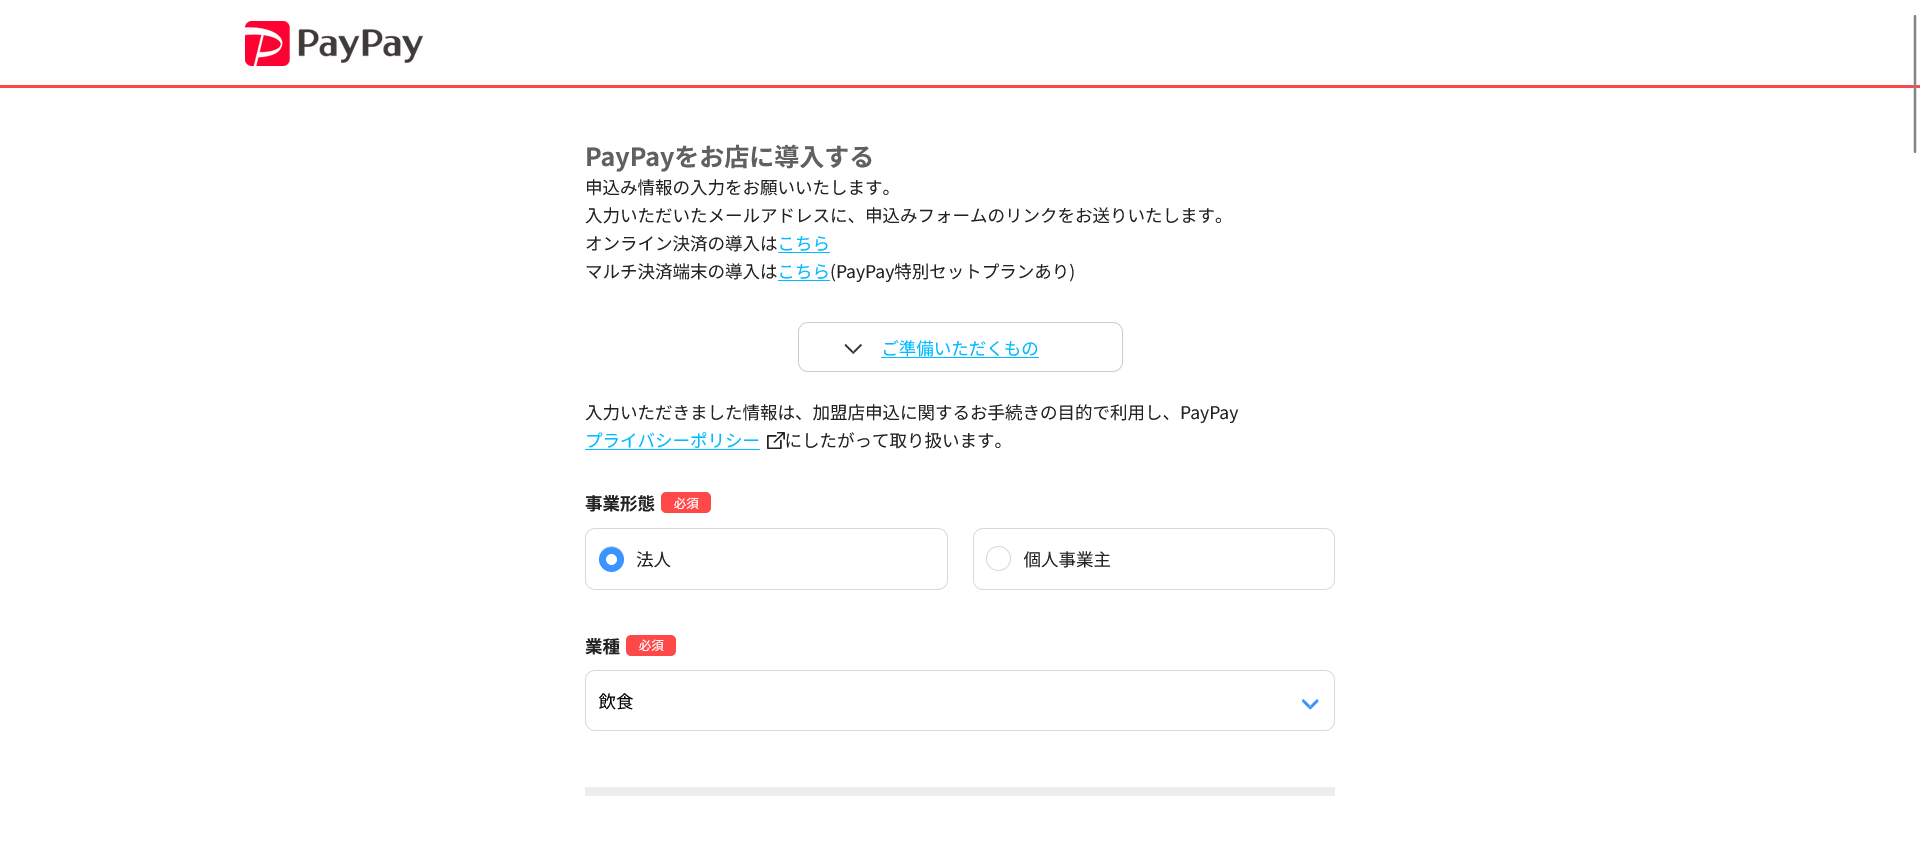 PayPay加盟店のお申し込み